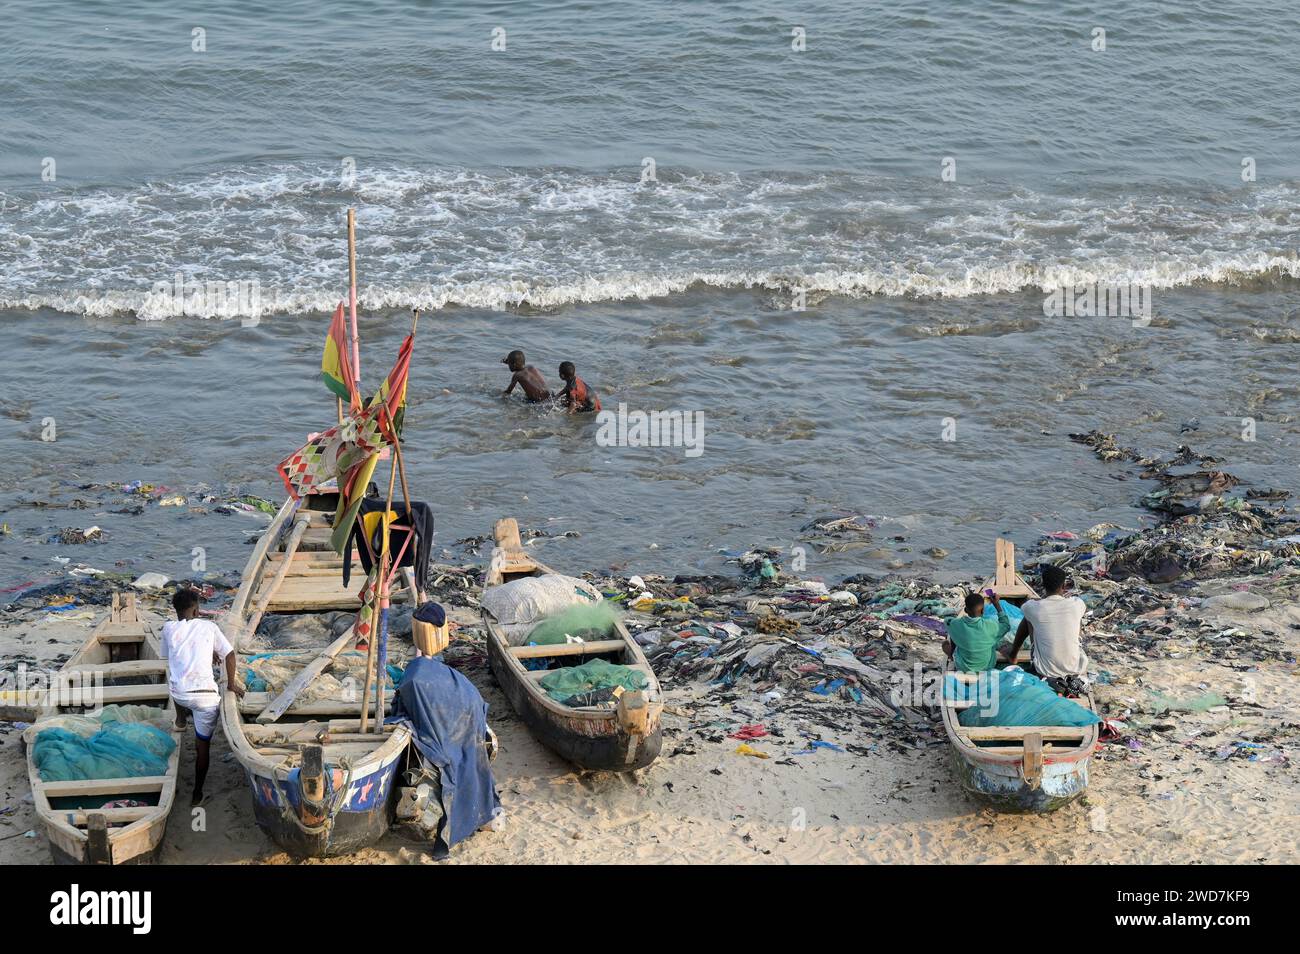 GHANA, Accra, Jamestown, porto di pesca nell'oceano atlantico, rifiuti di plastica / GHANA, Accra, Jamestown Fischereihafen am Atlantik, Plastik Abfall Foto Stock